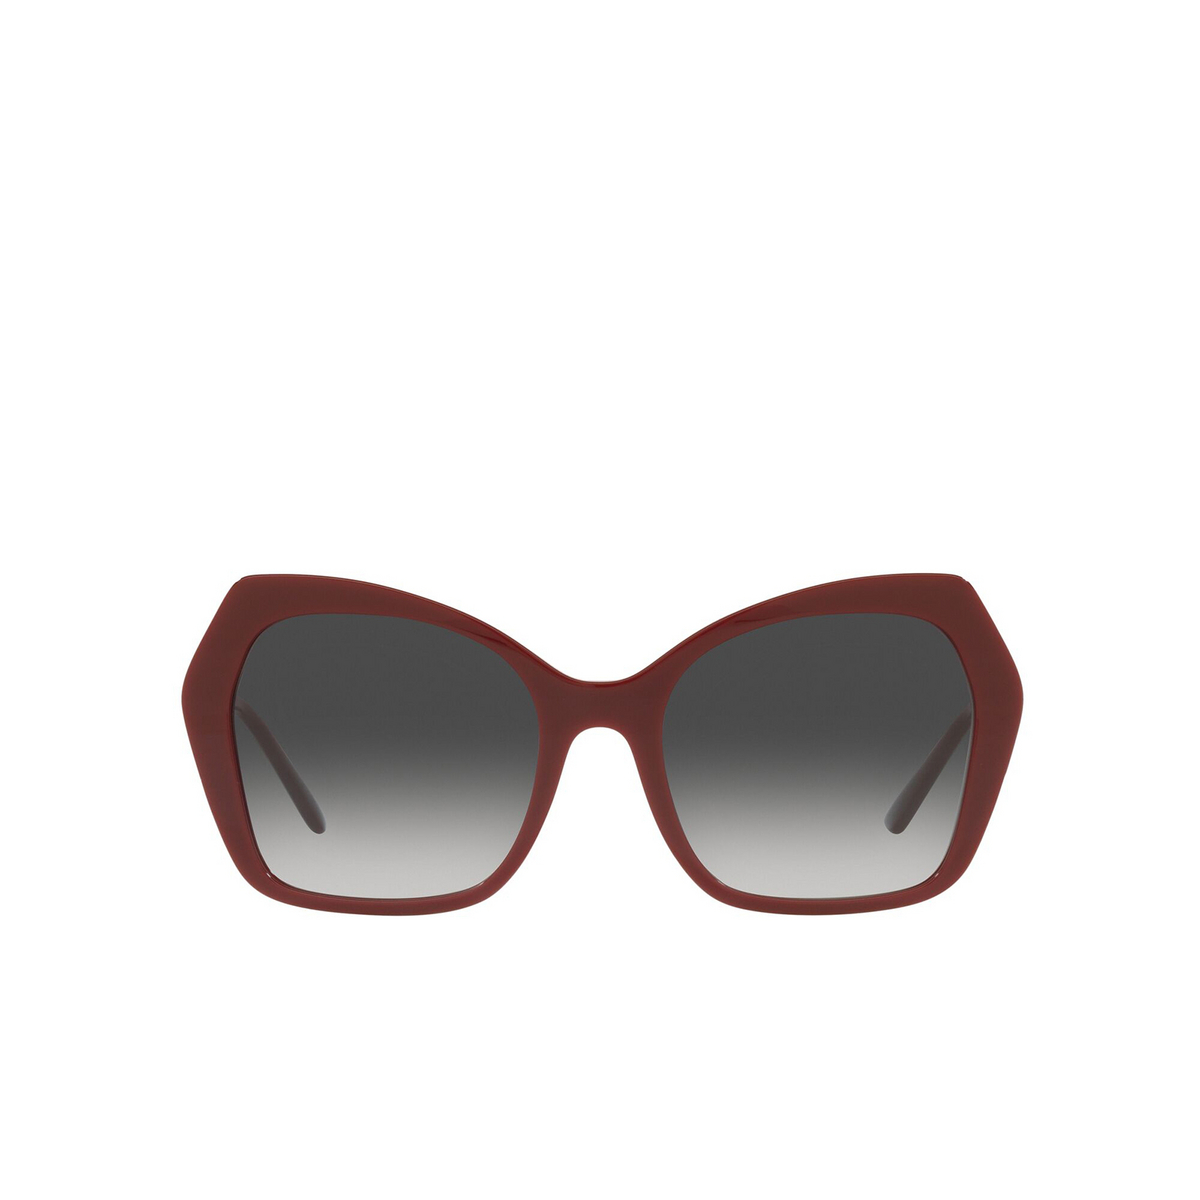 Dolce & Gabbana DG4399 Sunglasses 30918G Bordeuax - front view